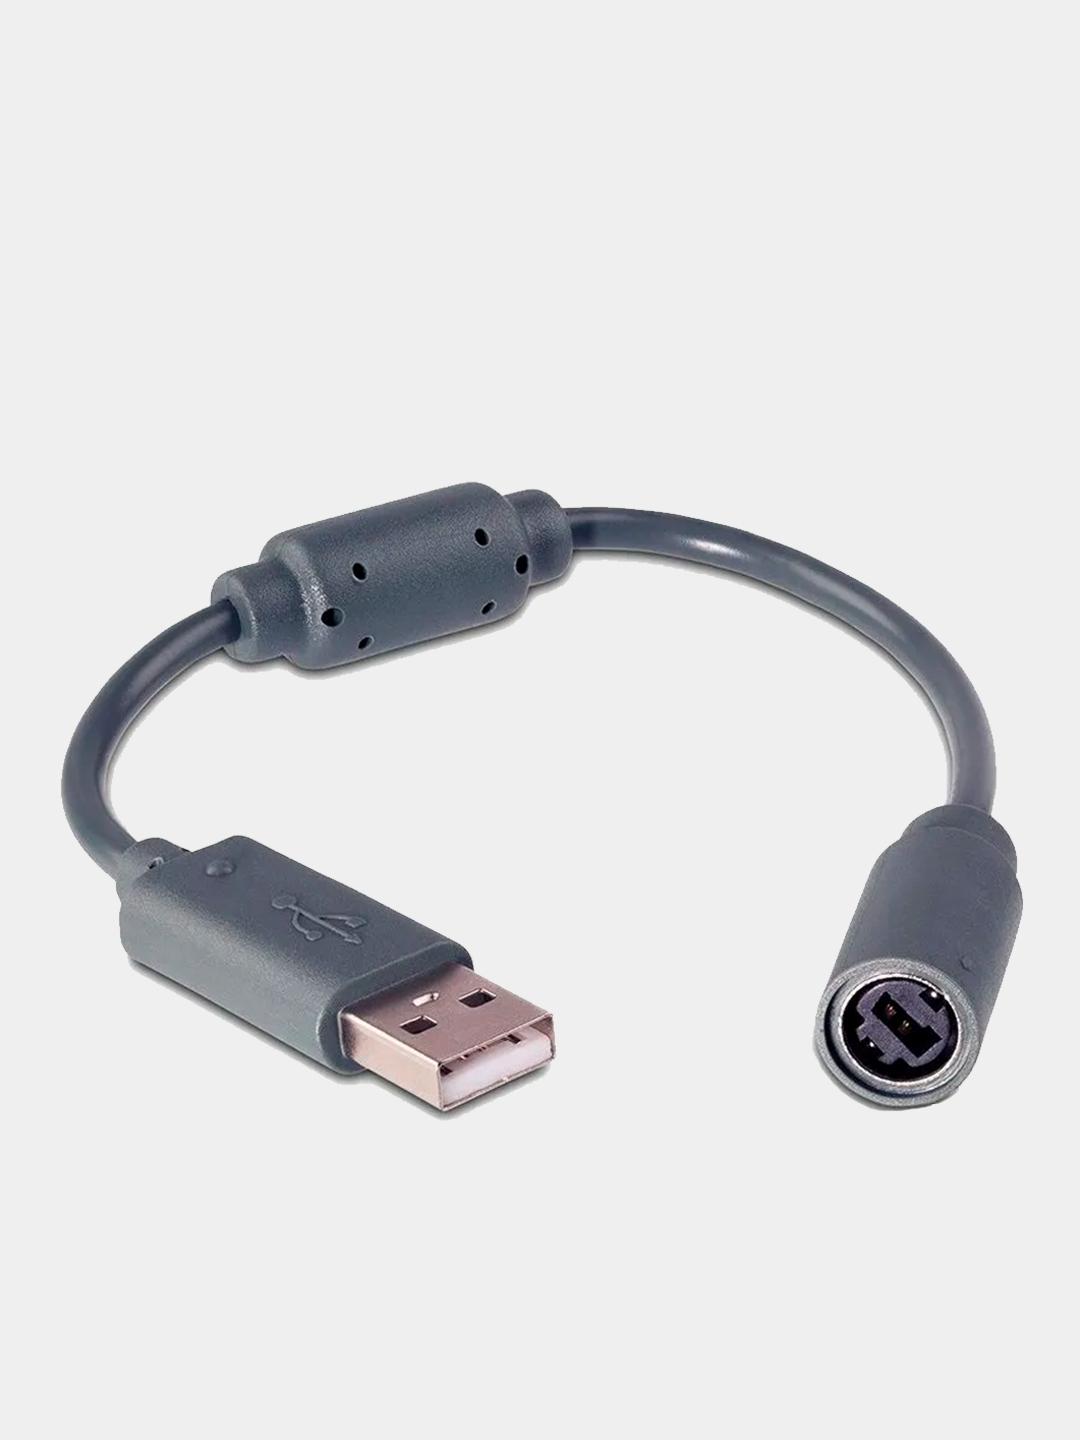 USB-адаптер Wi-Fi для Xbox 360